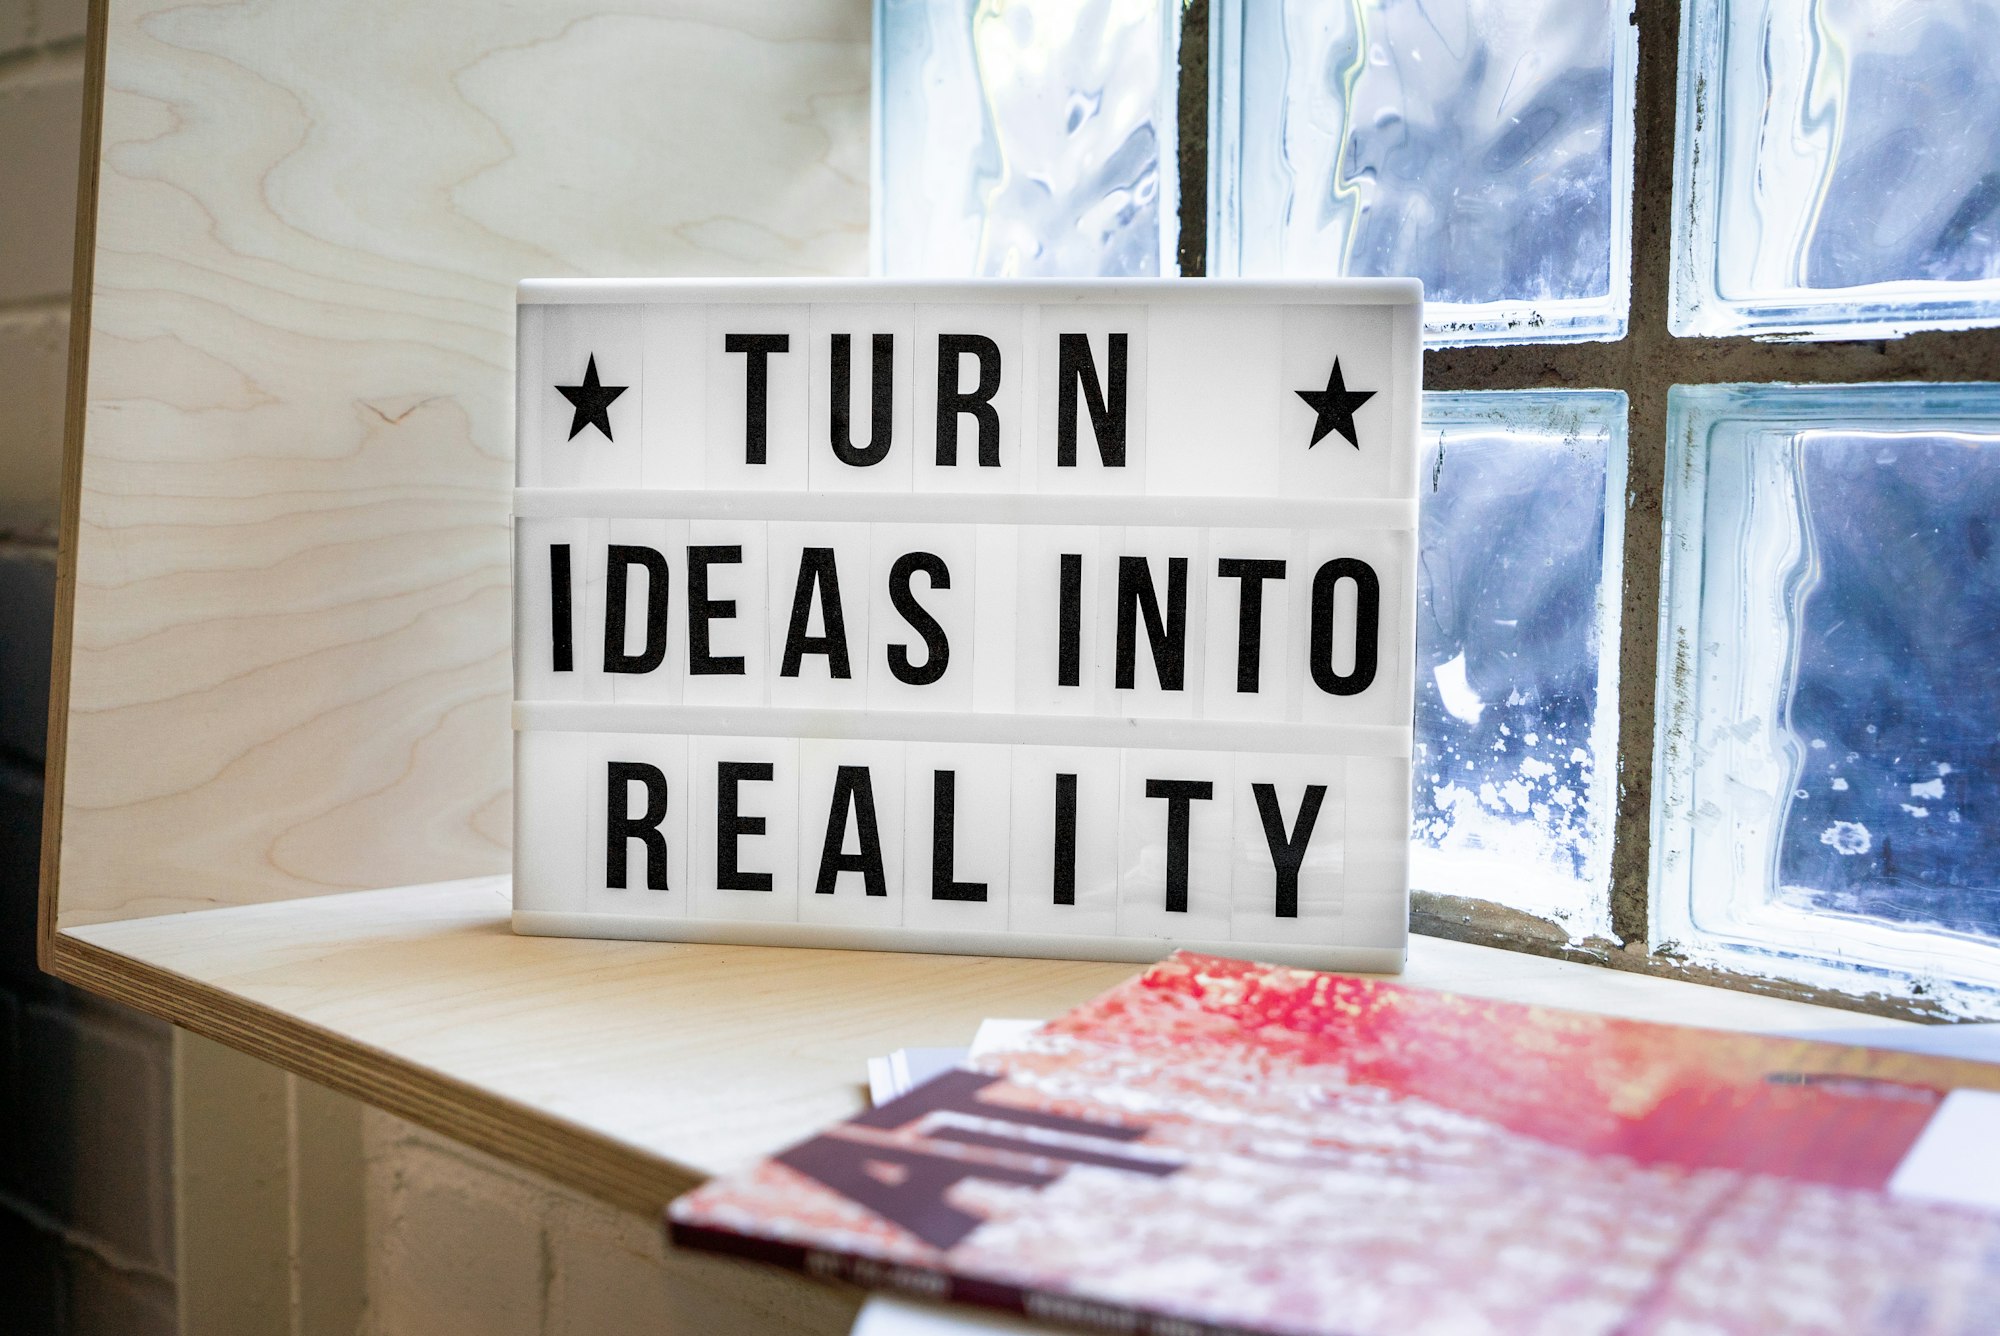 Turn Ideas into Reality! Frase motivacional em inglês